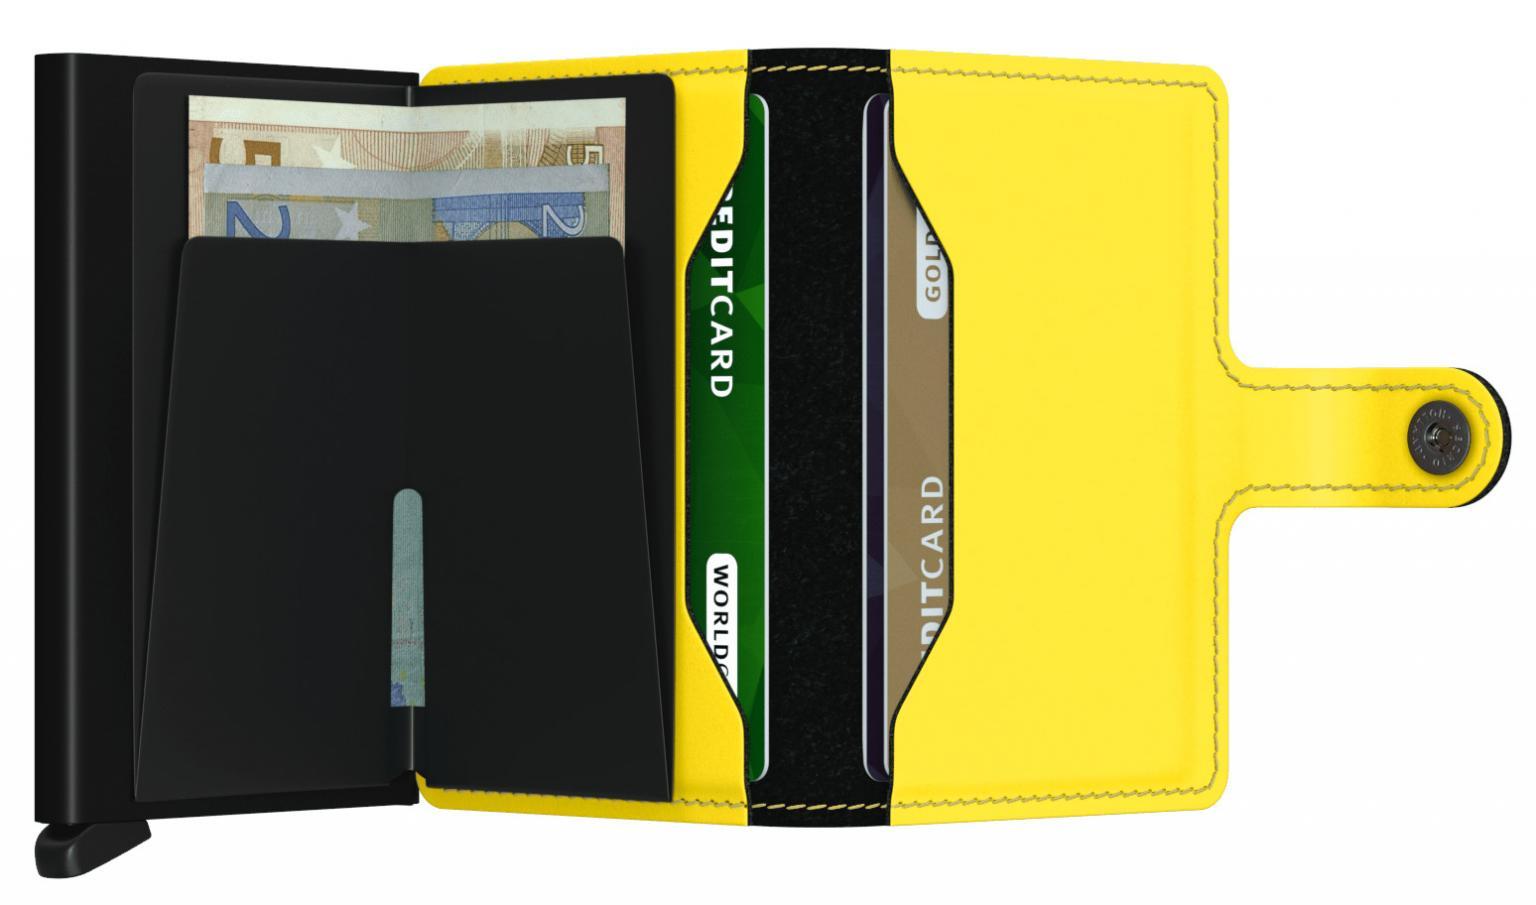 Miniwallet schwarz gelb matt Secrid Kartenbörse RFID-Protection